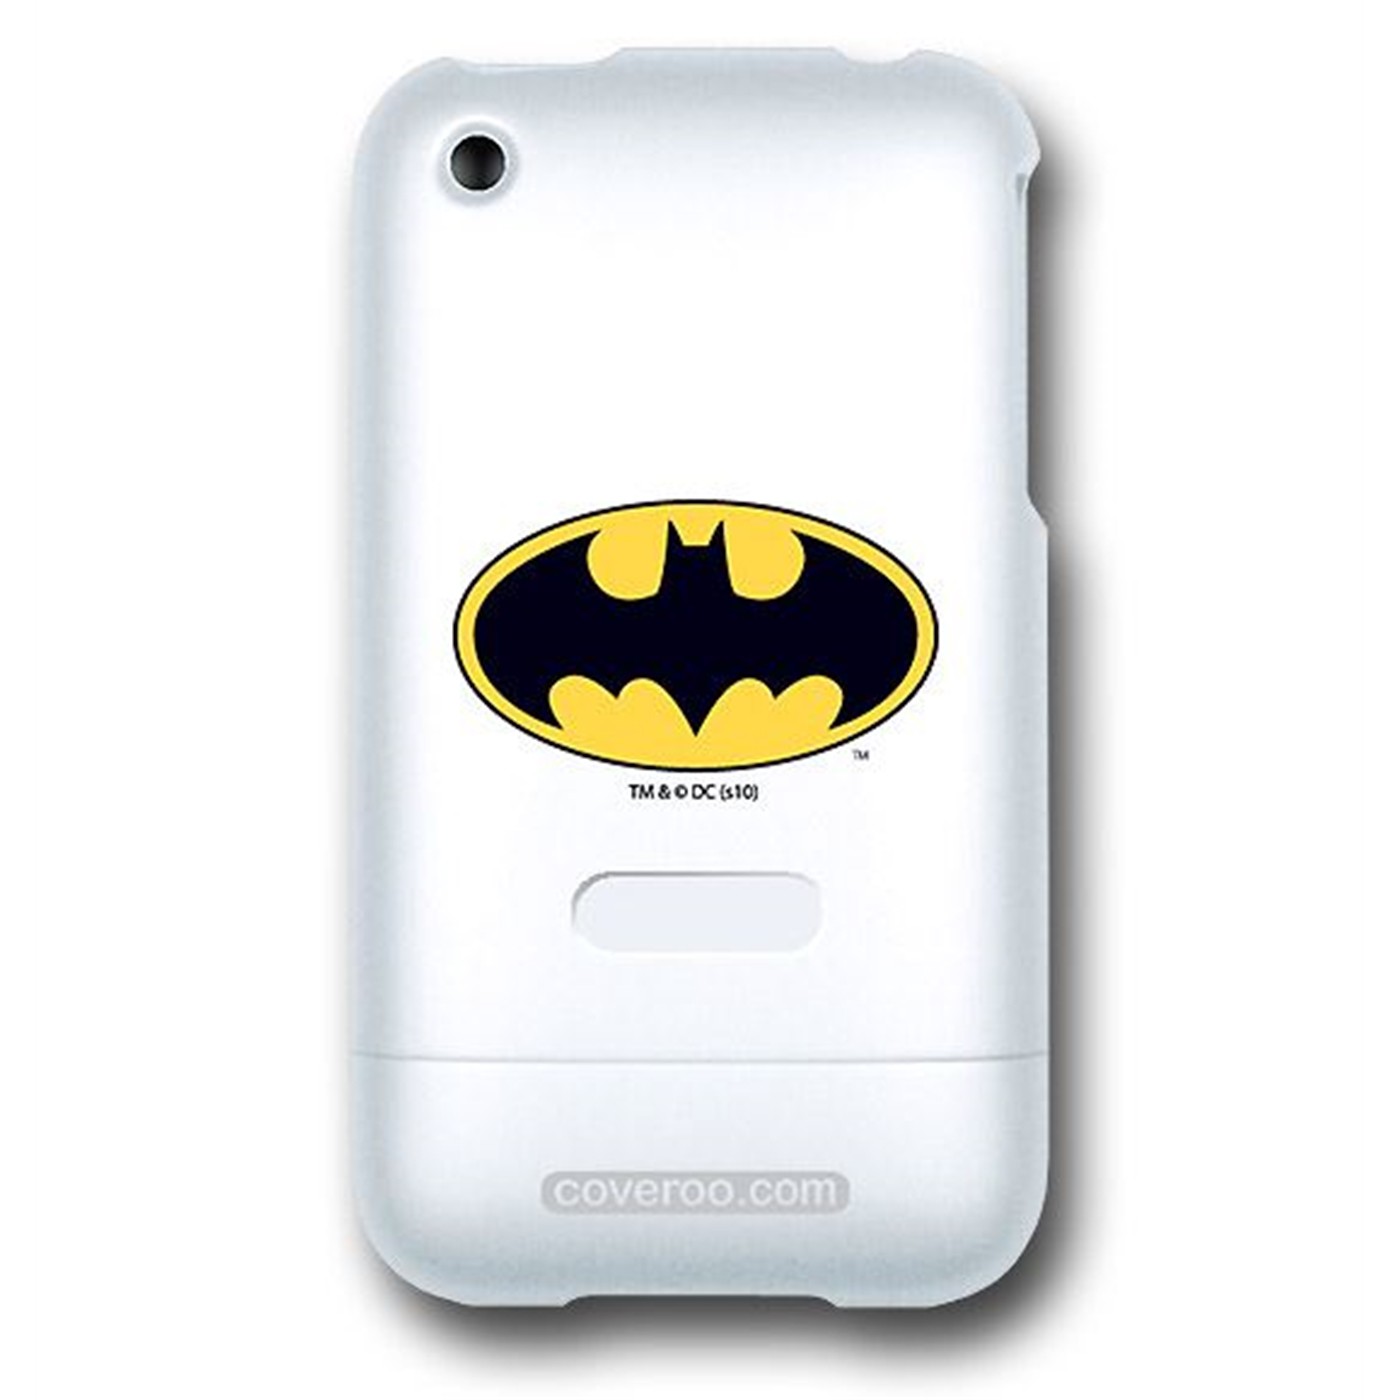 Batman Symbol iPhone 3 Slider Case